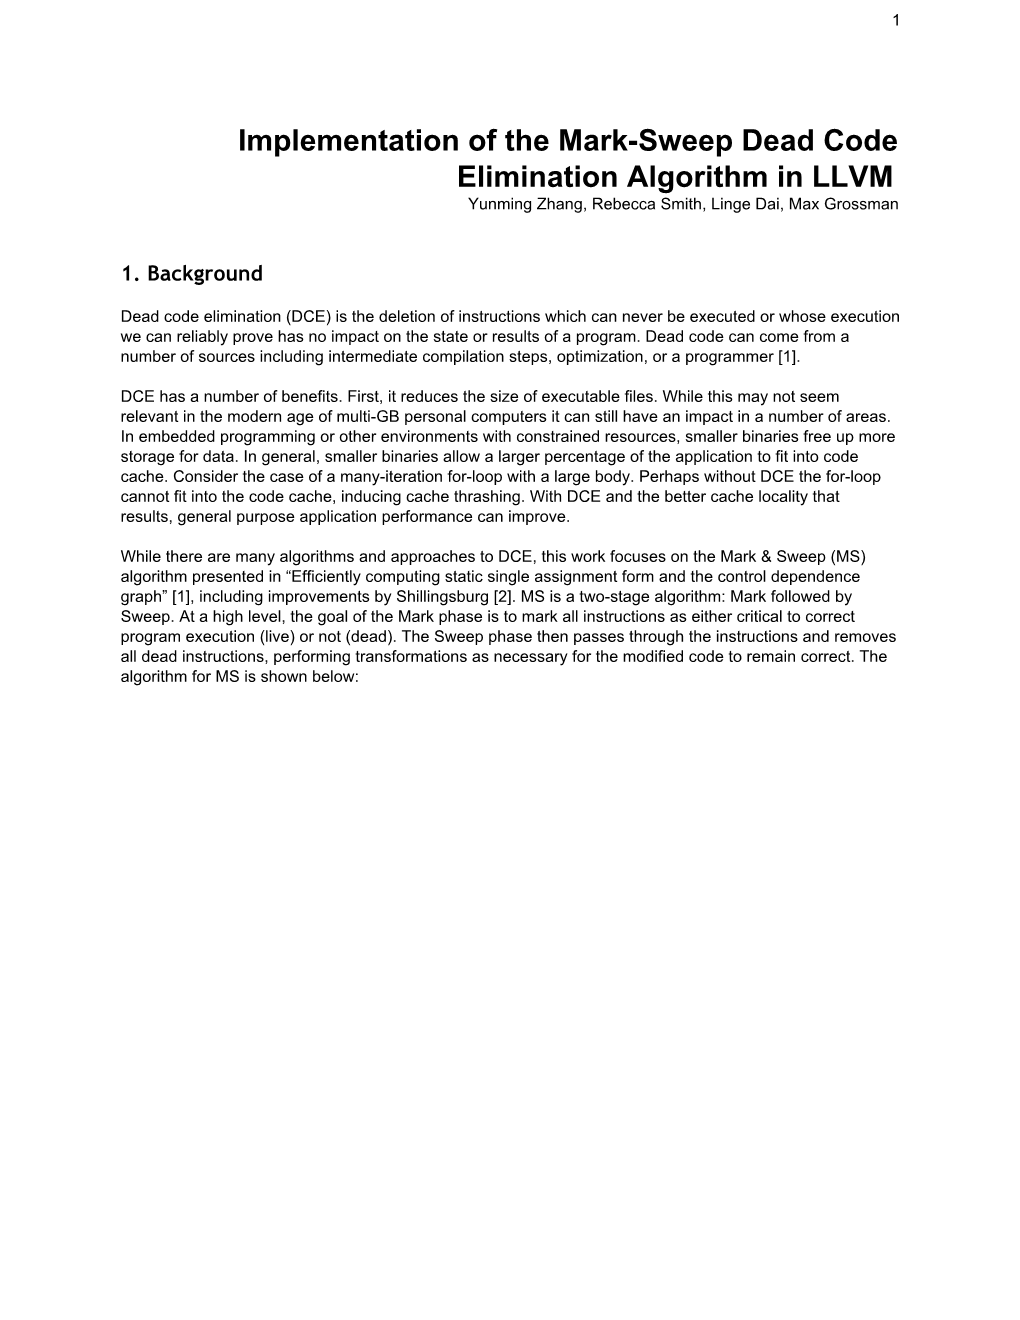 Implementation of the Marksweep Dead Code Elimination Algorithm in LLVM